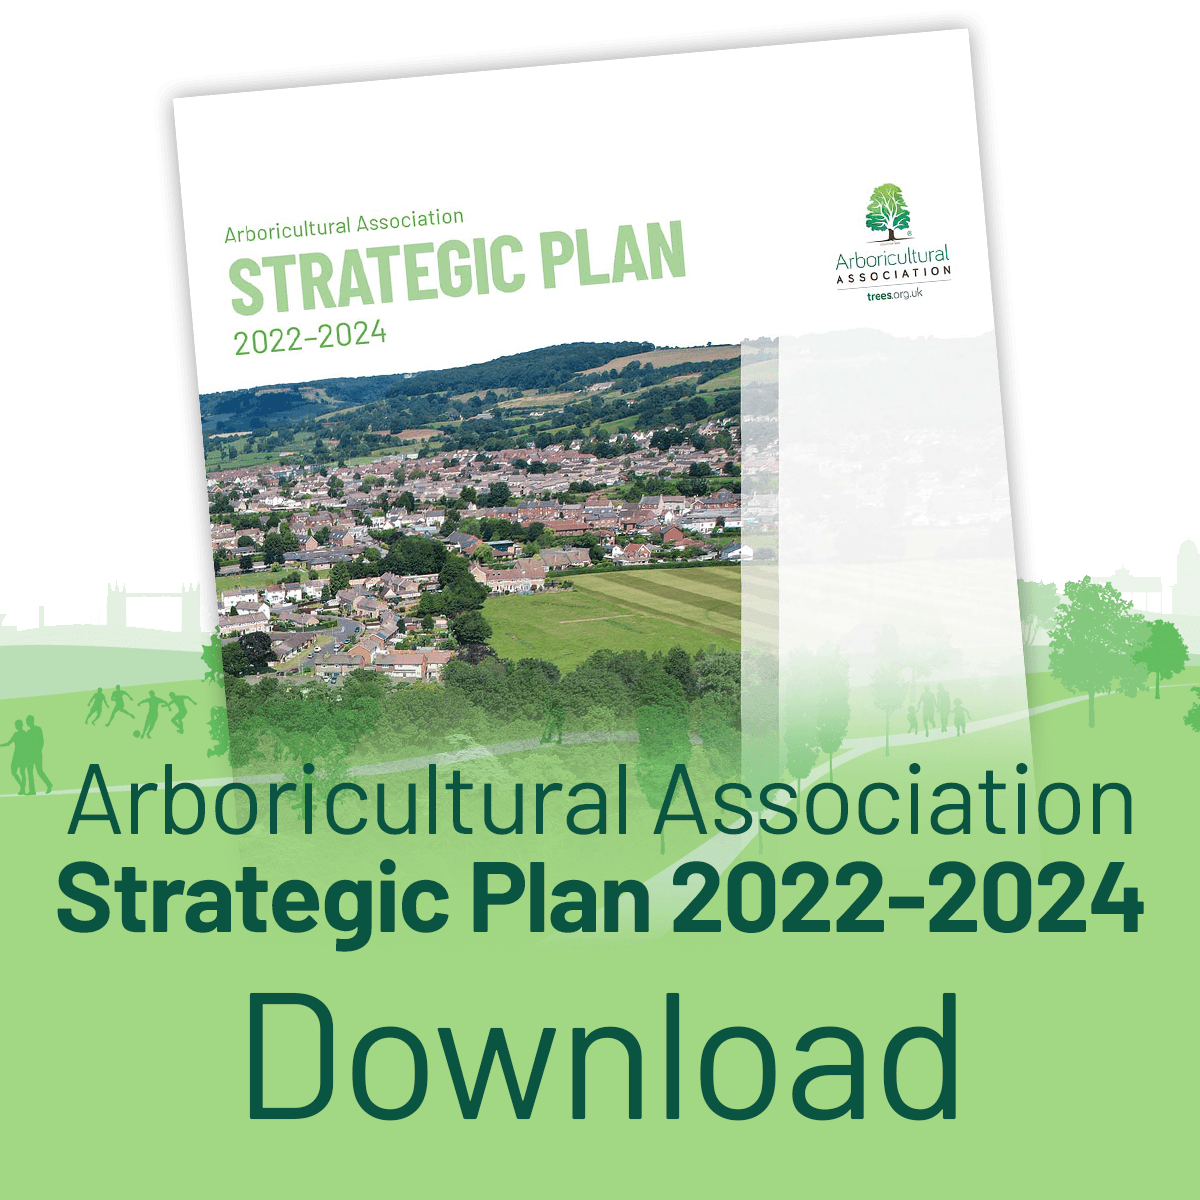 Download the Strategic Plan 2022-2024